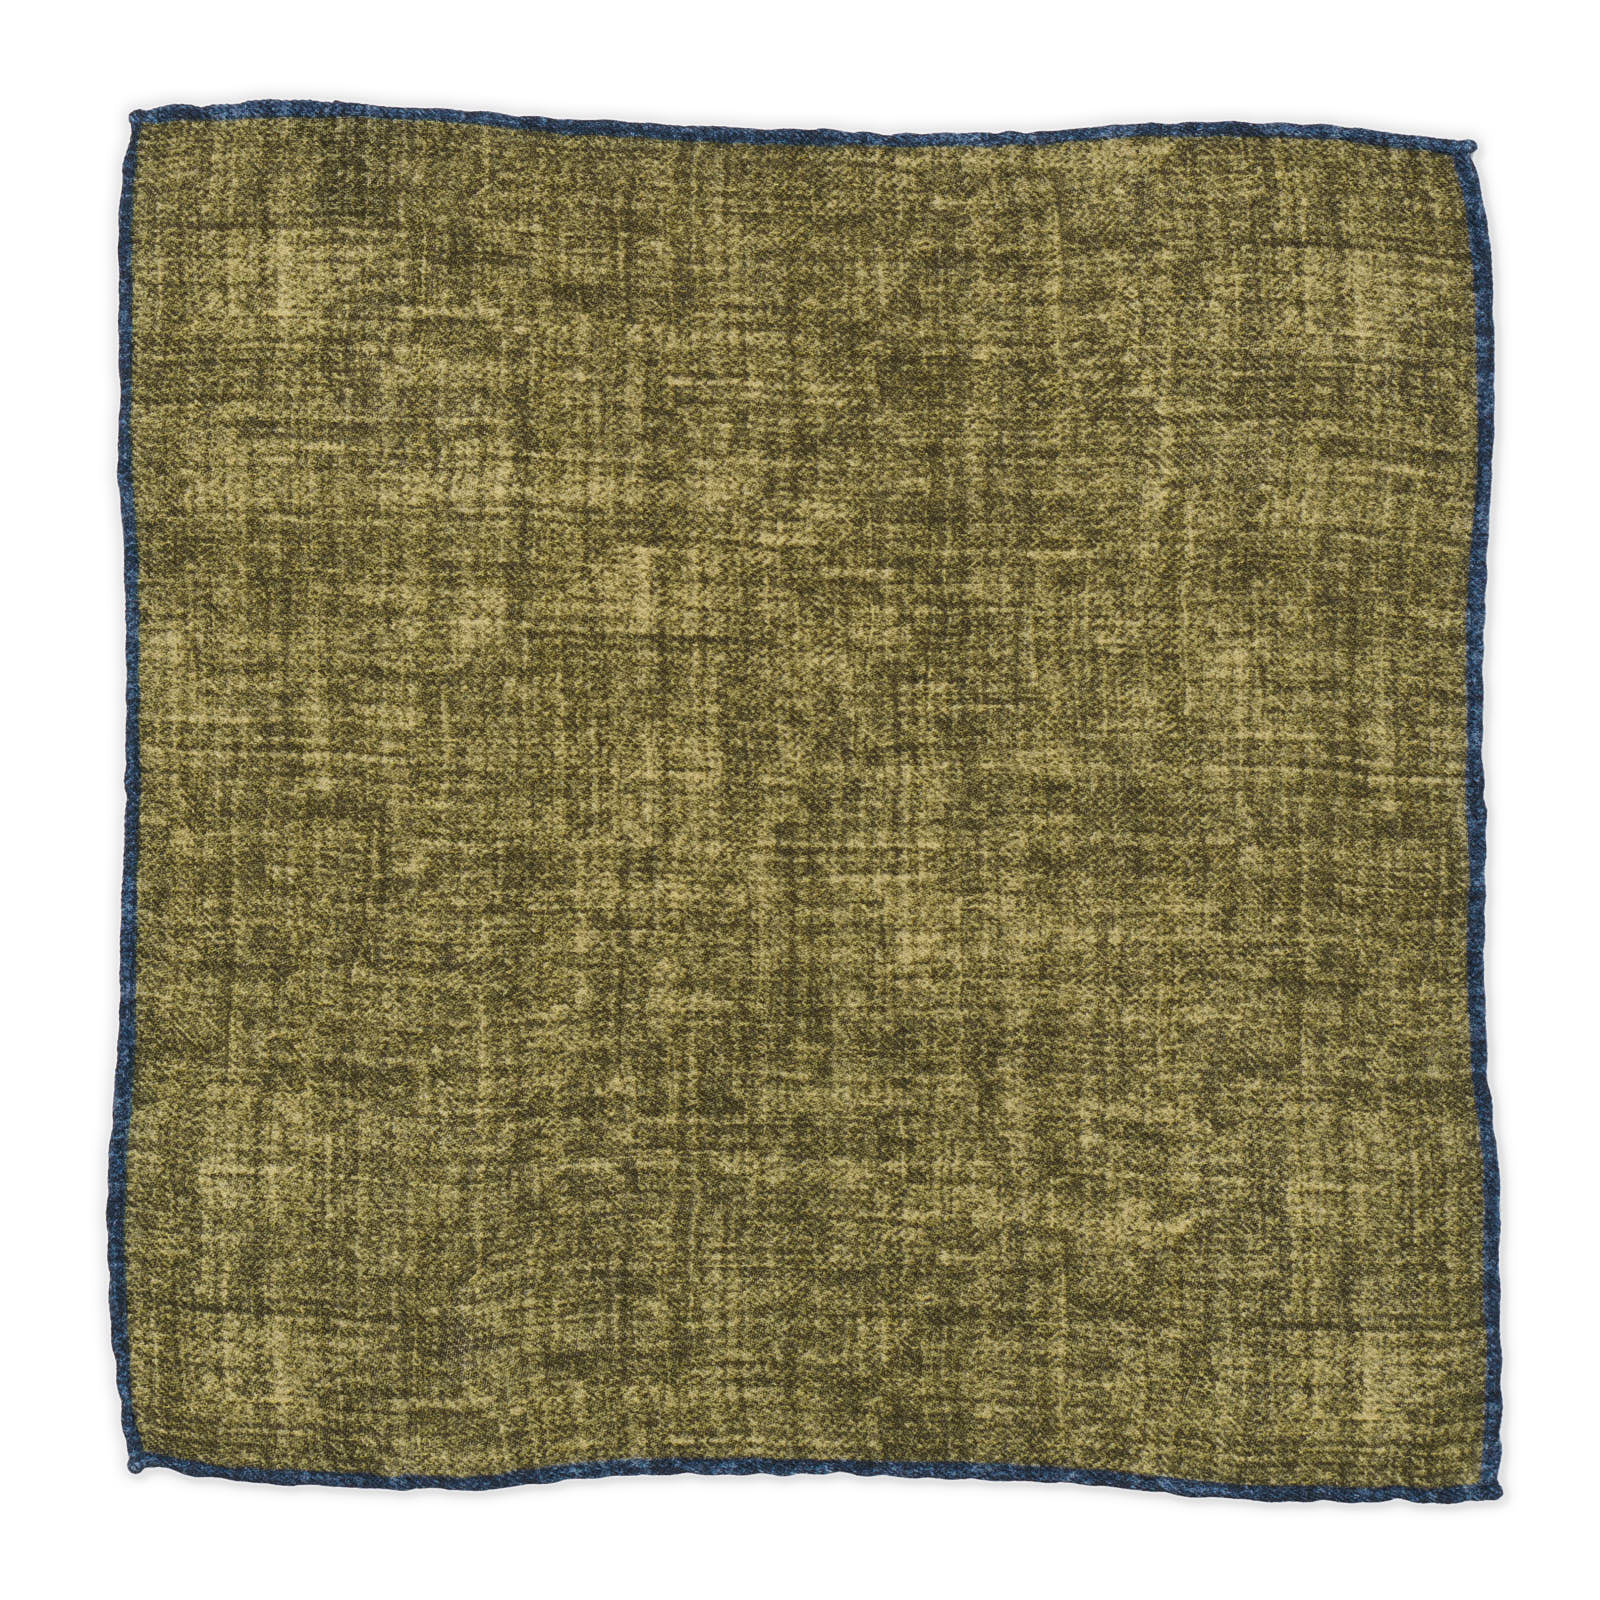 ROSI Handmade Bluish Green Solid Wool Pocket Square NEW 31cm x 31cm